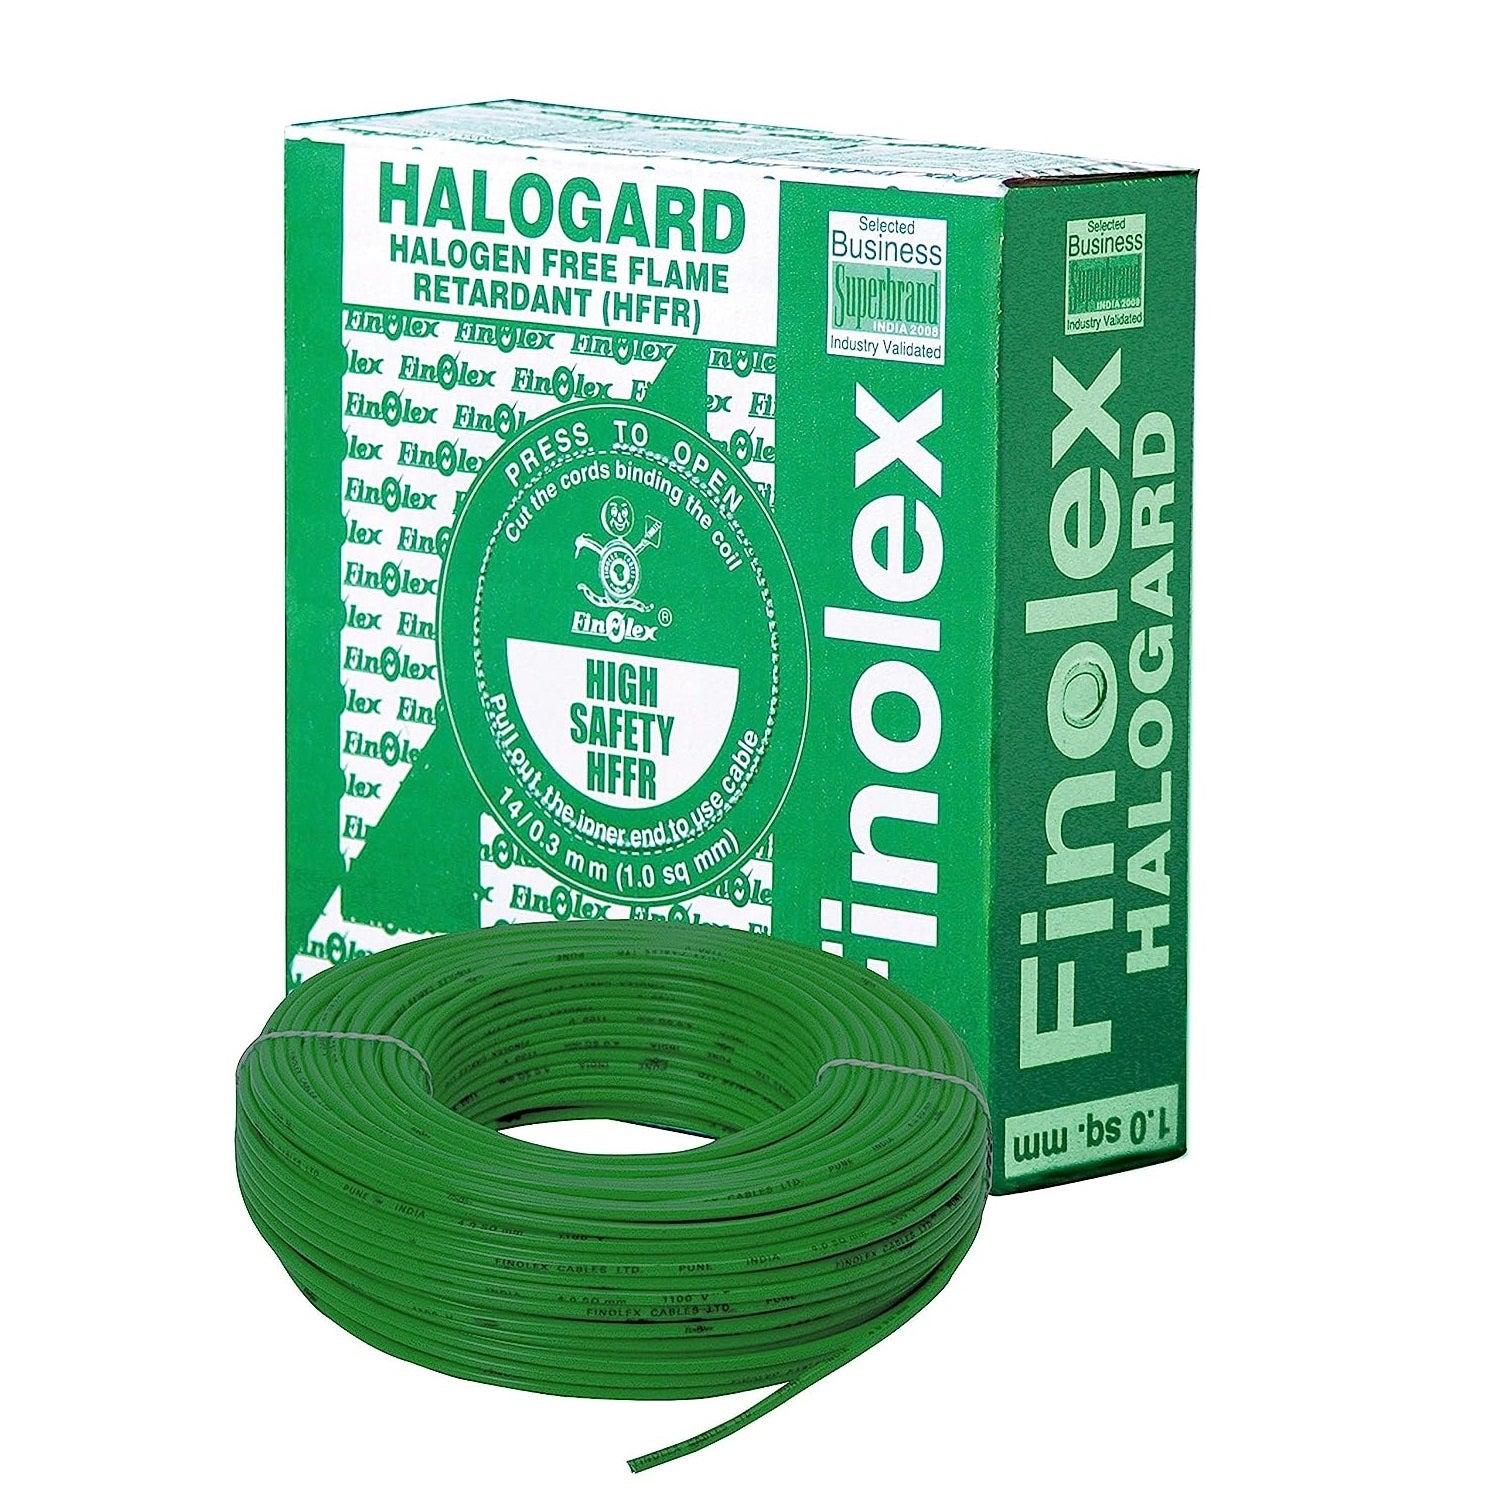 Finolex Halogen Free Flame Retardant Industrial Cables 90m Coil